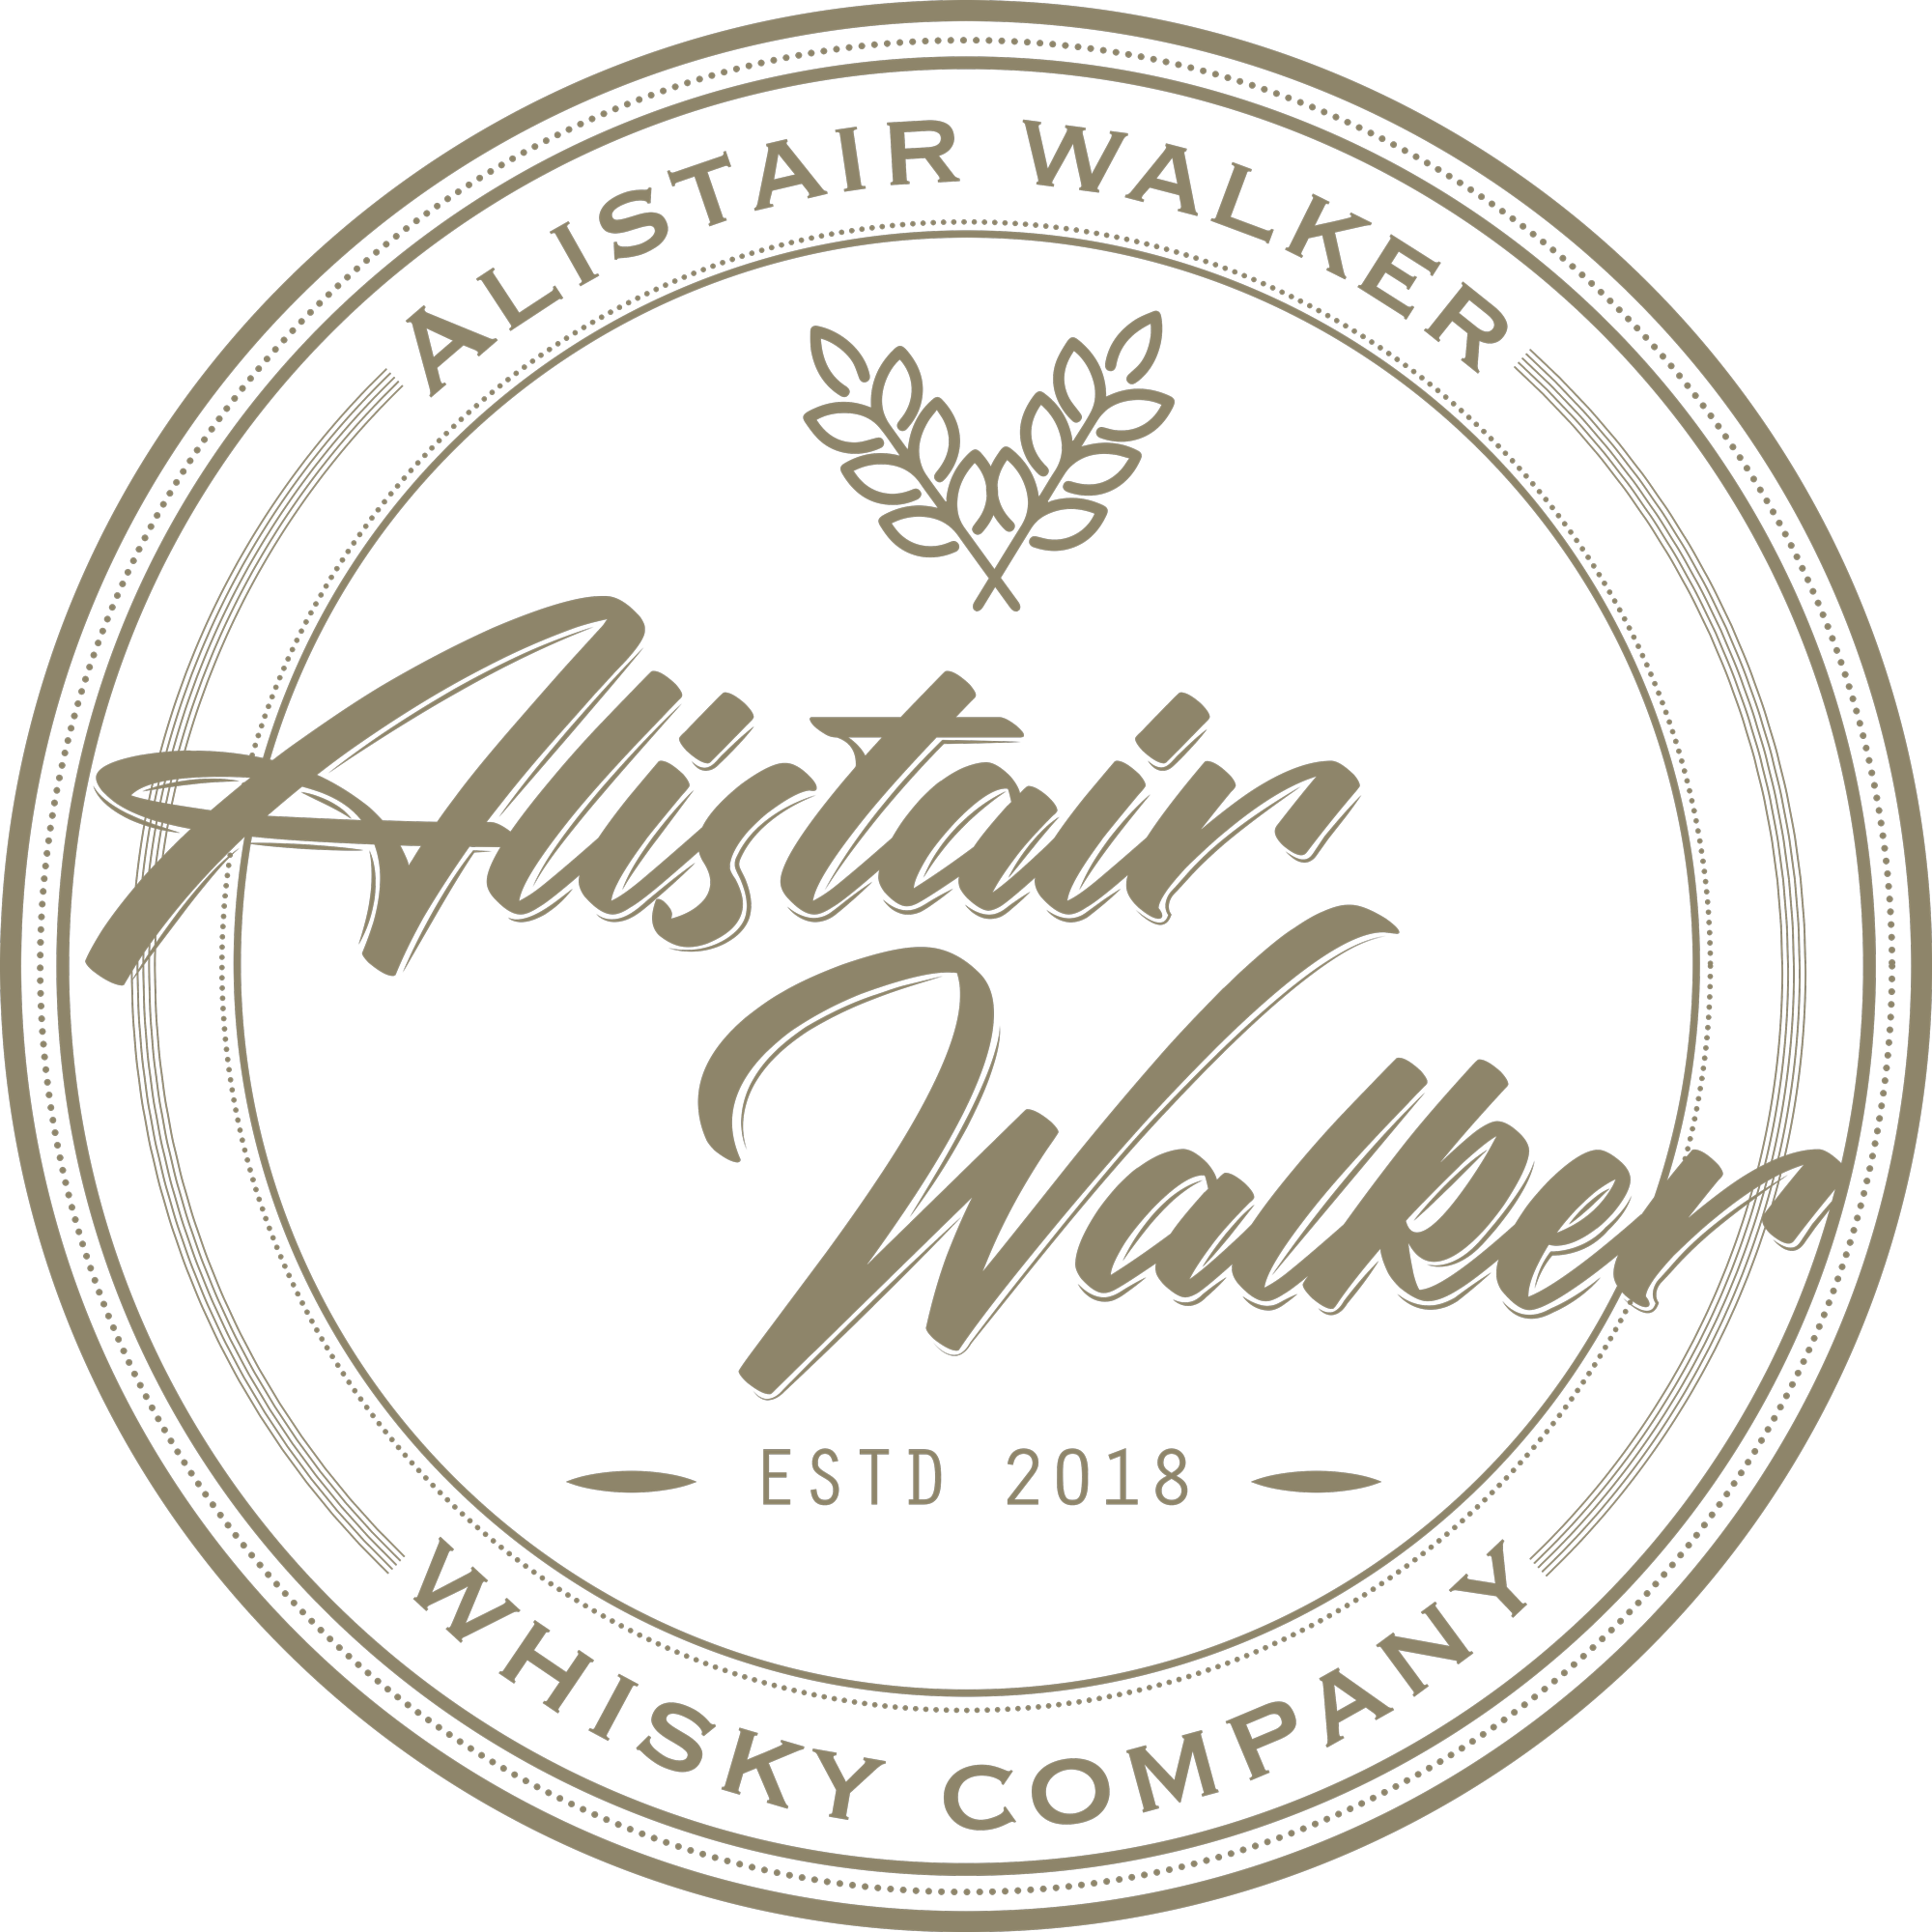 Alistair Walker Whisky Company